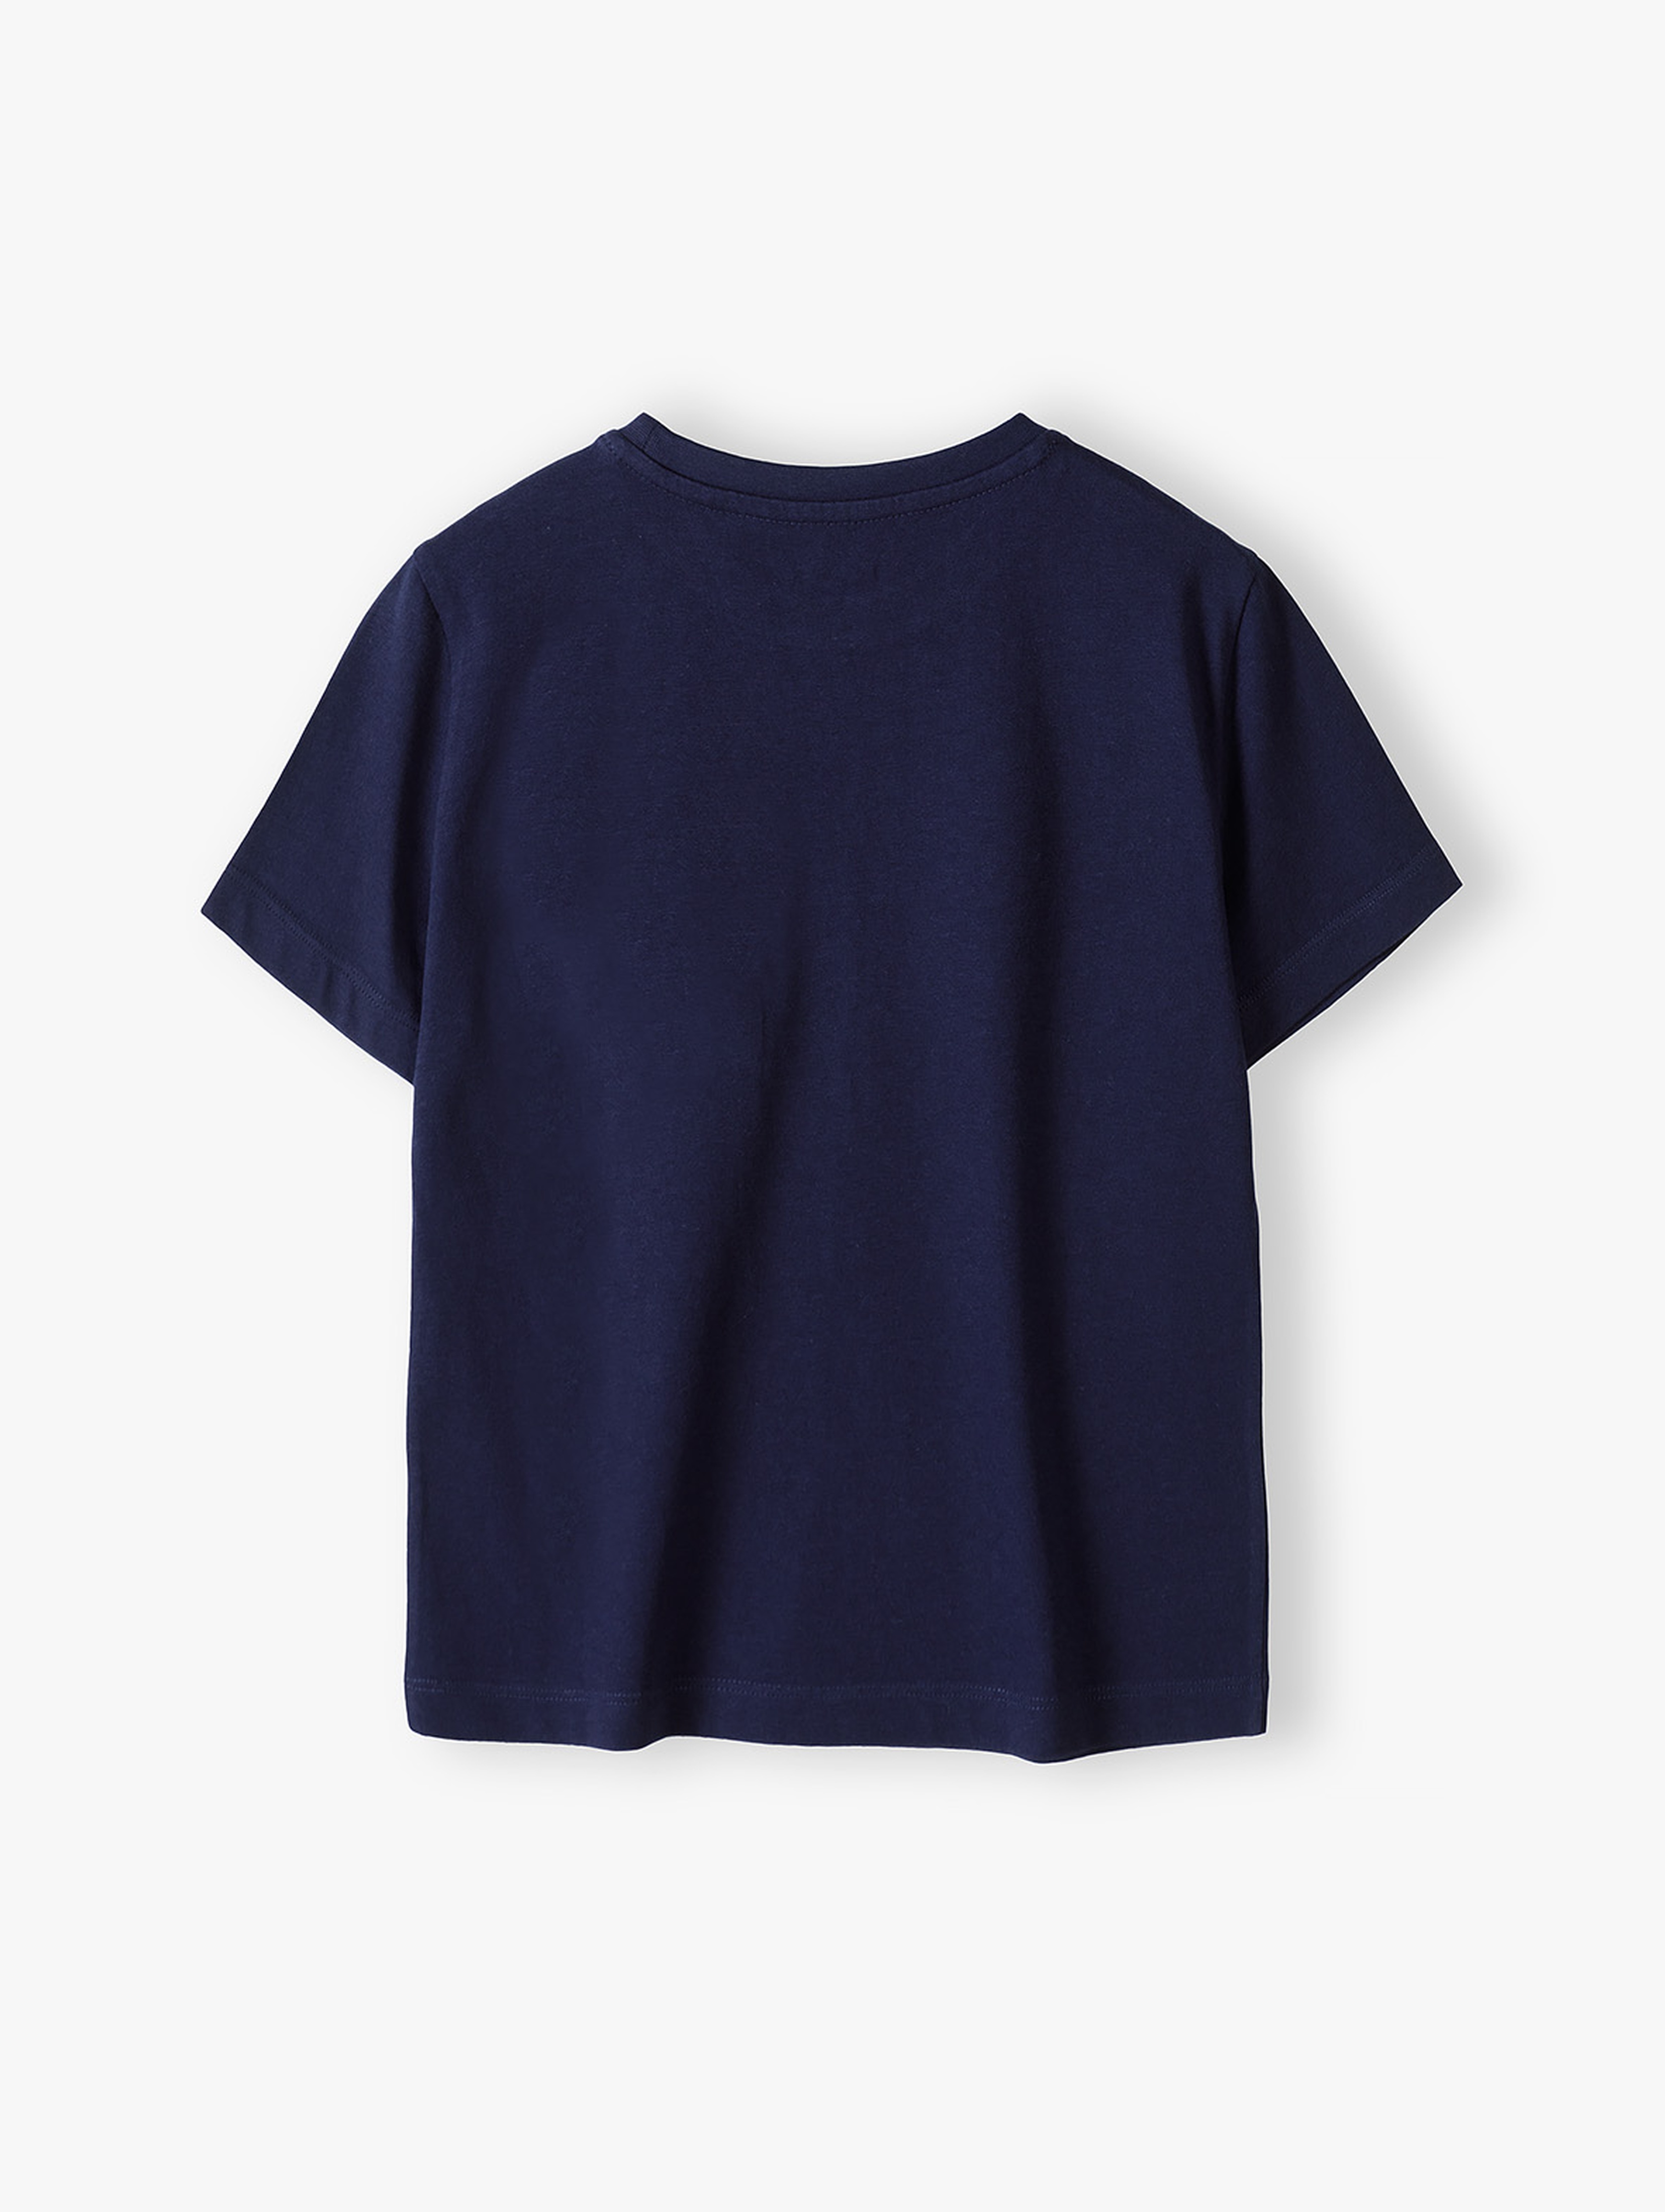 Granatowy t-shirt dla chłopca - Lincoln&Sharks